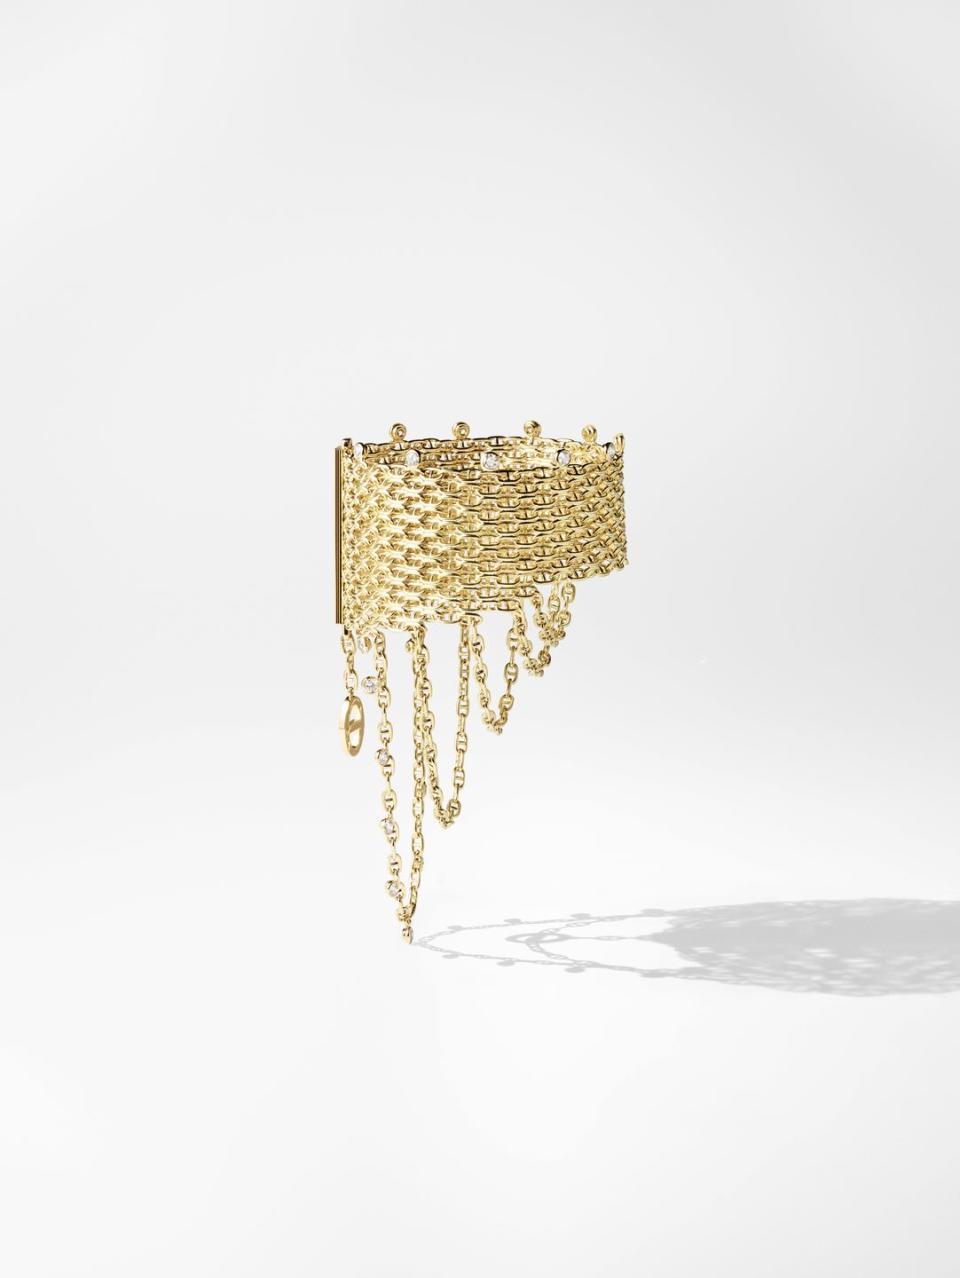 7) Hermès Voltige Bracelet, with yellow gold and diamonds